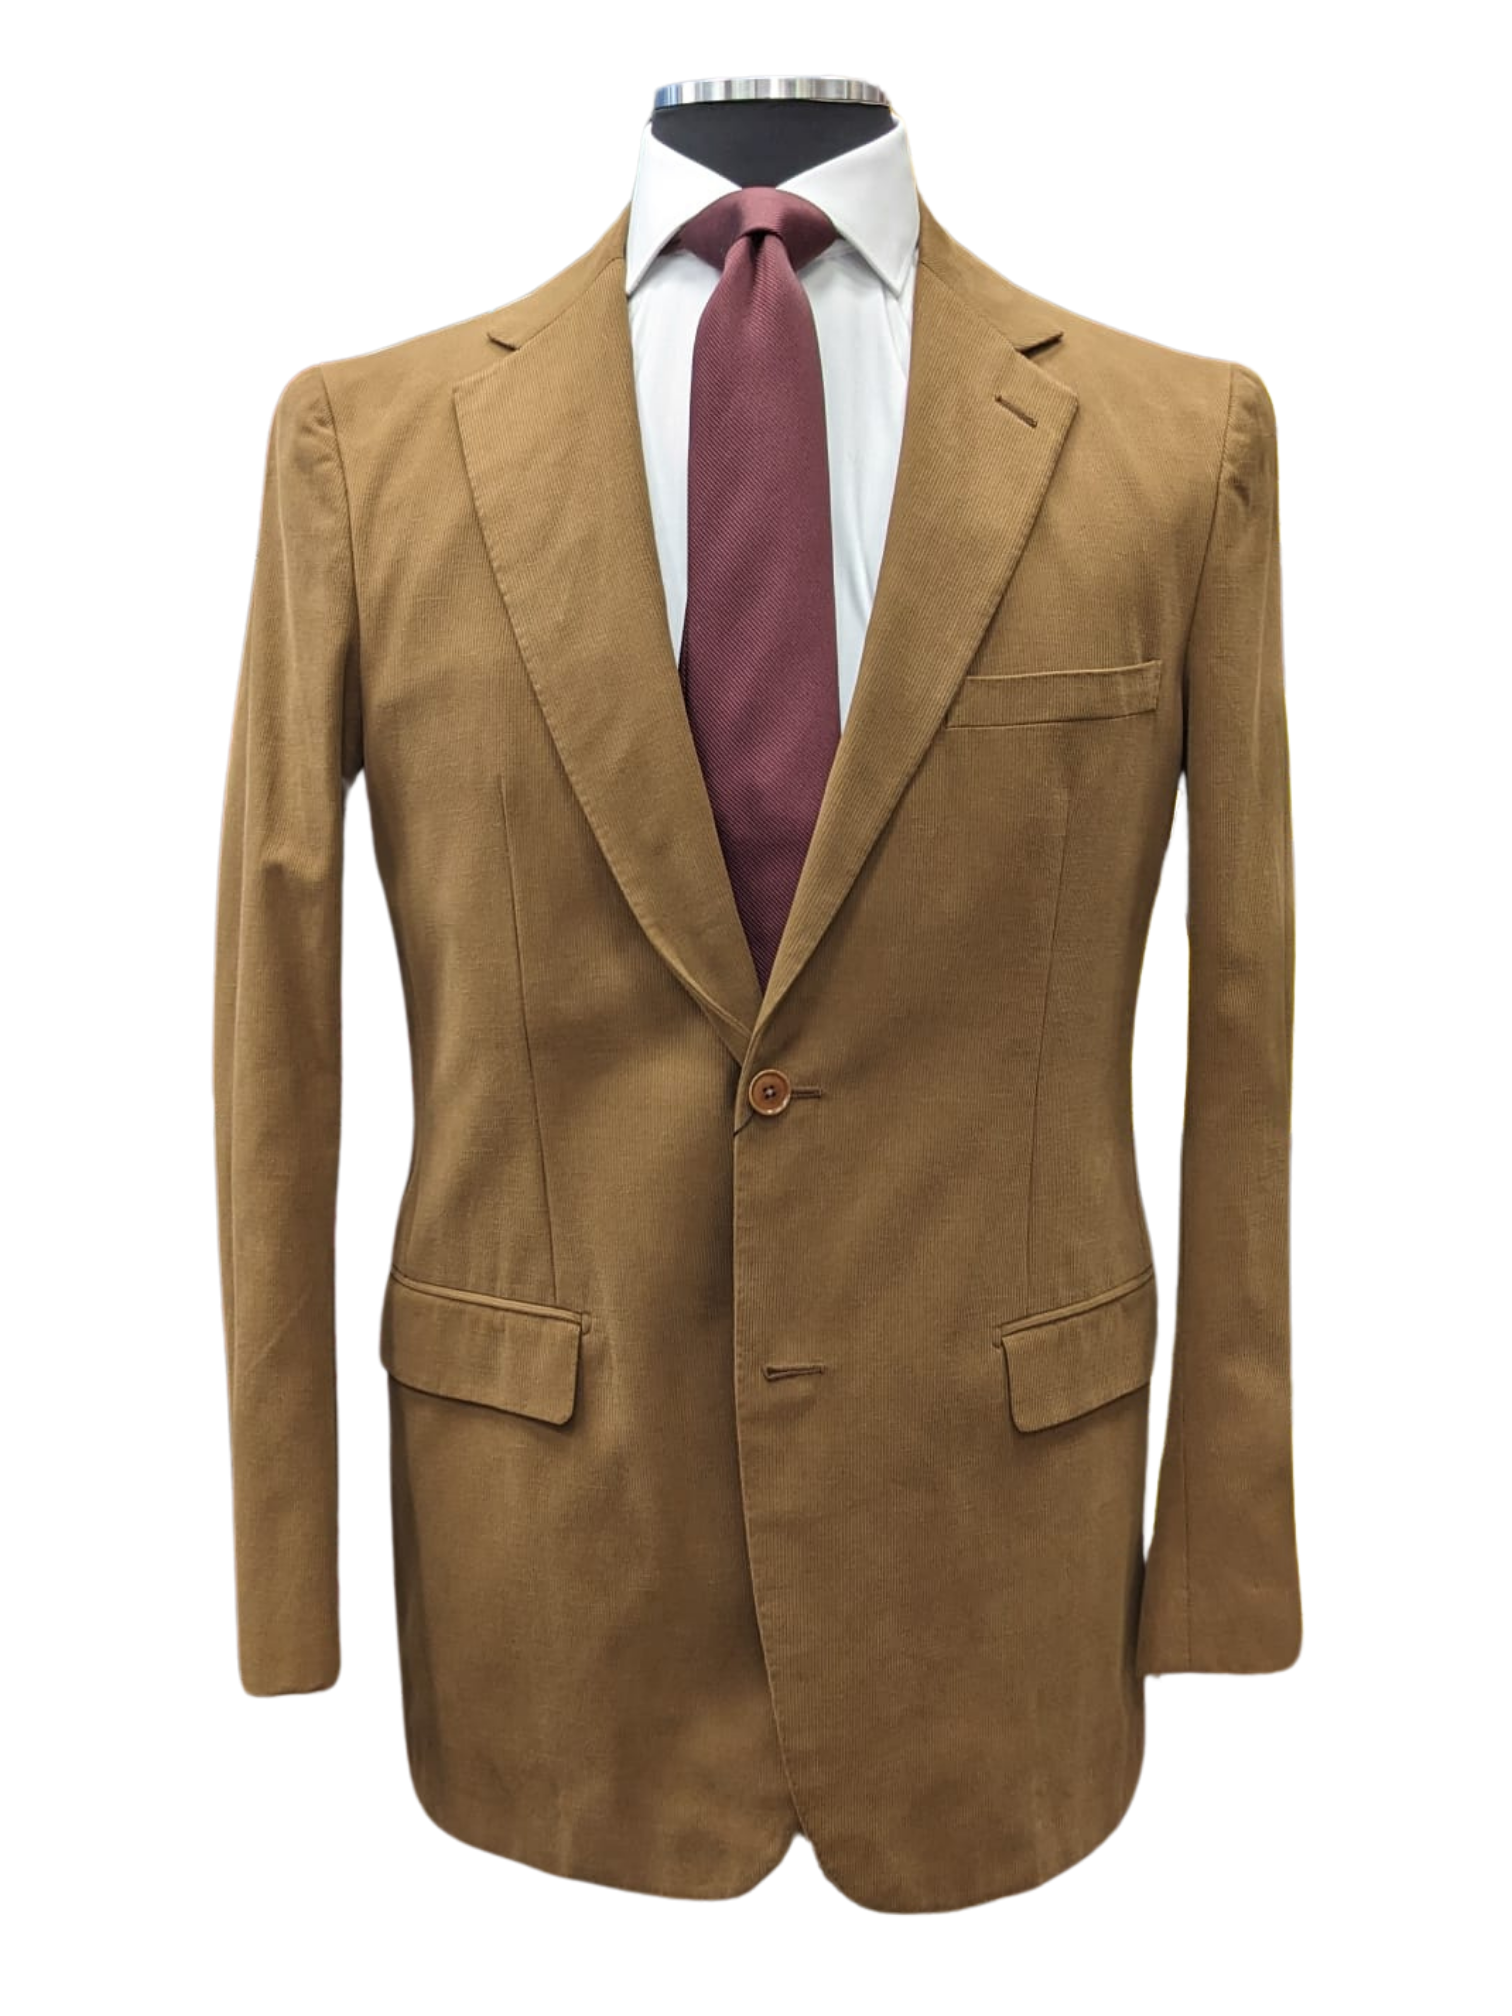 Sartoria Partenopea Italy 40R 50 Tan Beige Wool Silk Men's Blazer Sportcoat